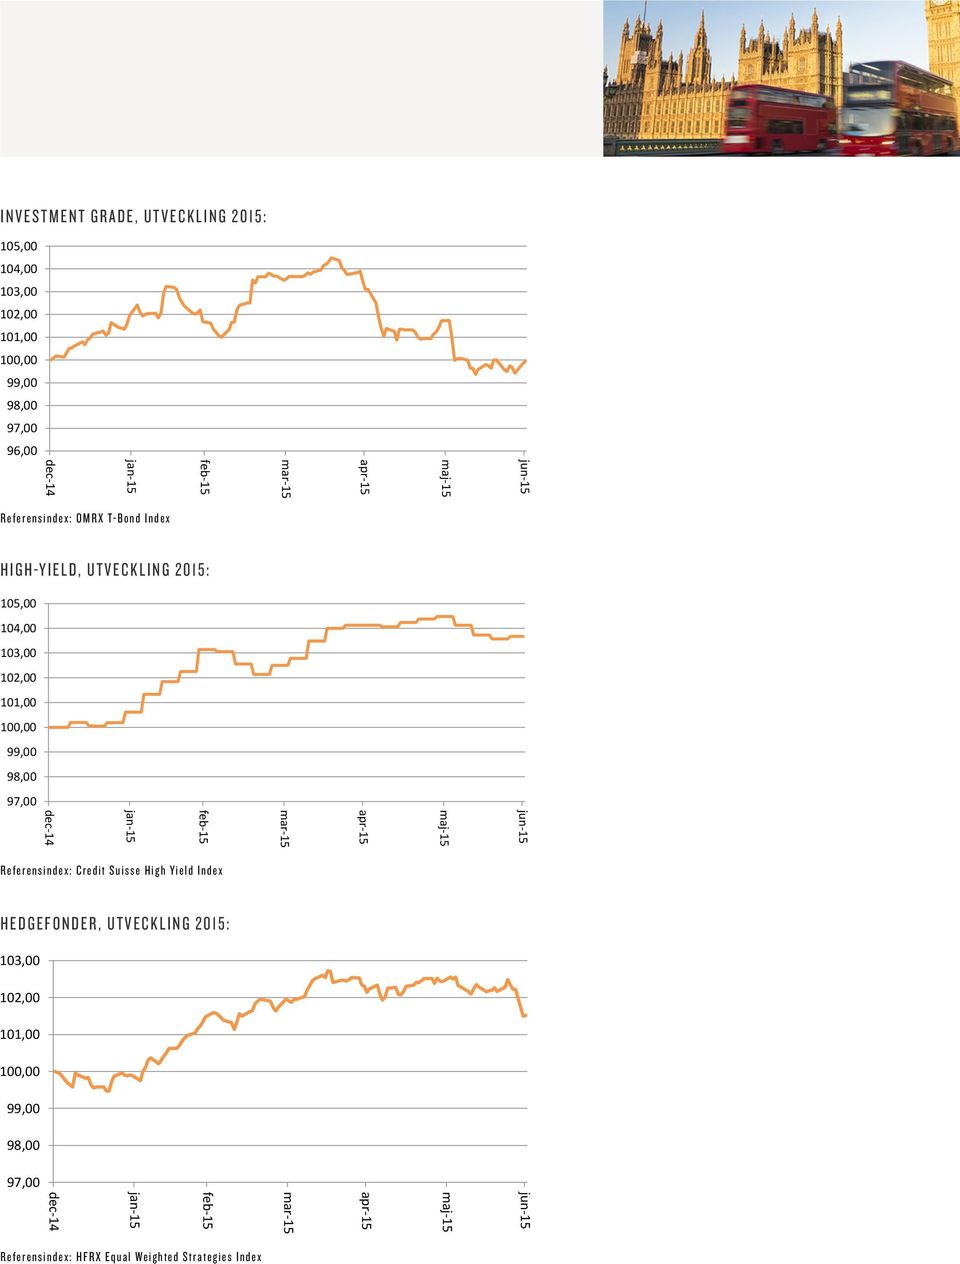 High-Yield Hedgefonder Referensindex: Credit Suisse High Yield Index Hedgefonder